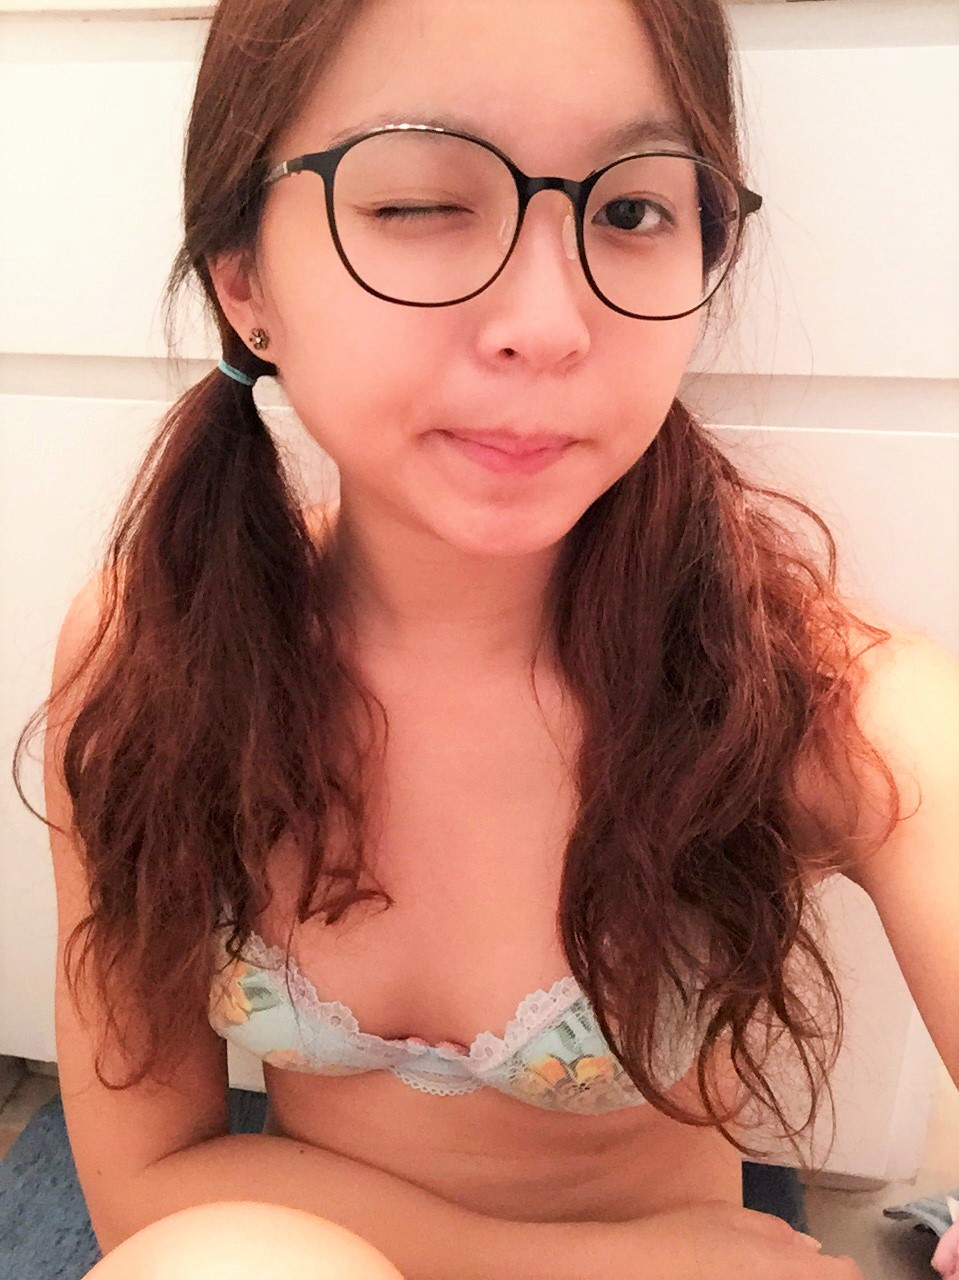 Petite Chinese Teen - Petite Asian Teen Takes Nude Selfies - HT4jtBT Porn Pic - EPORNER